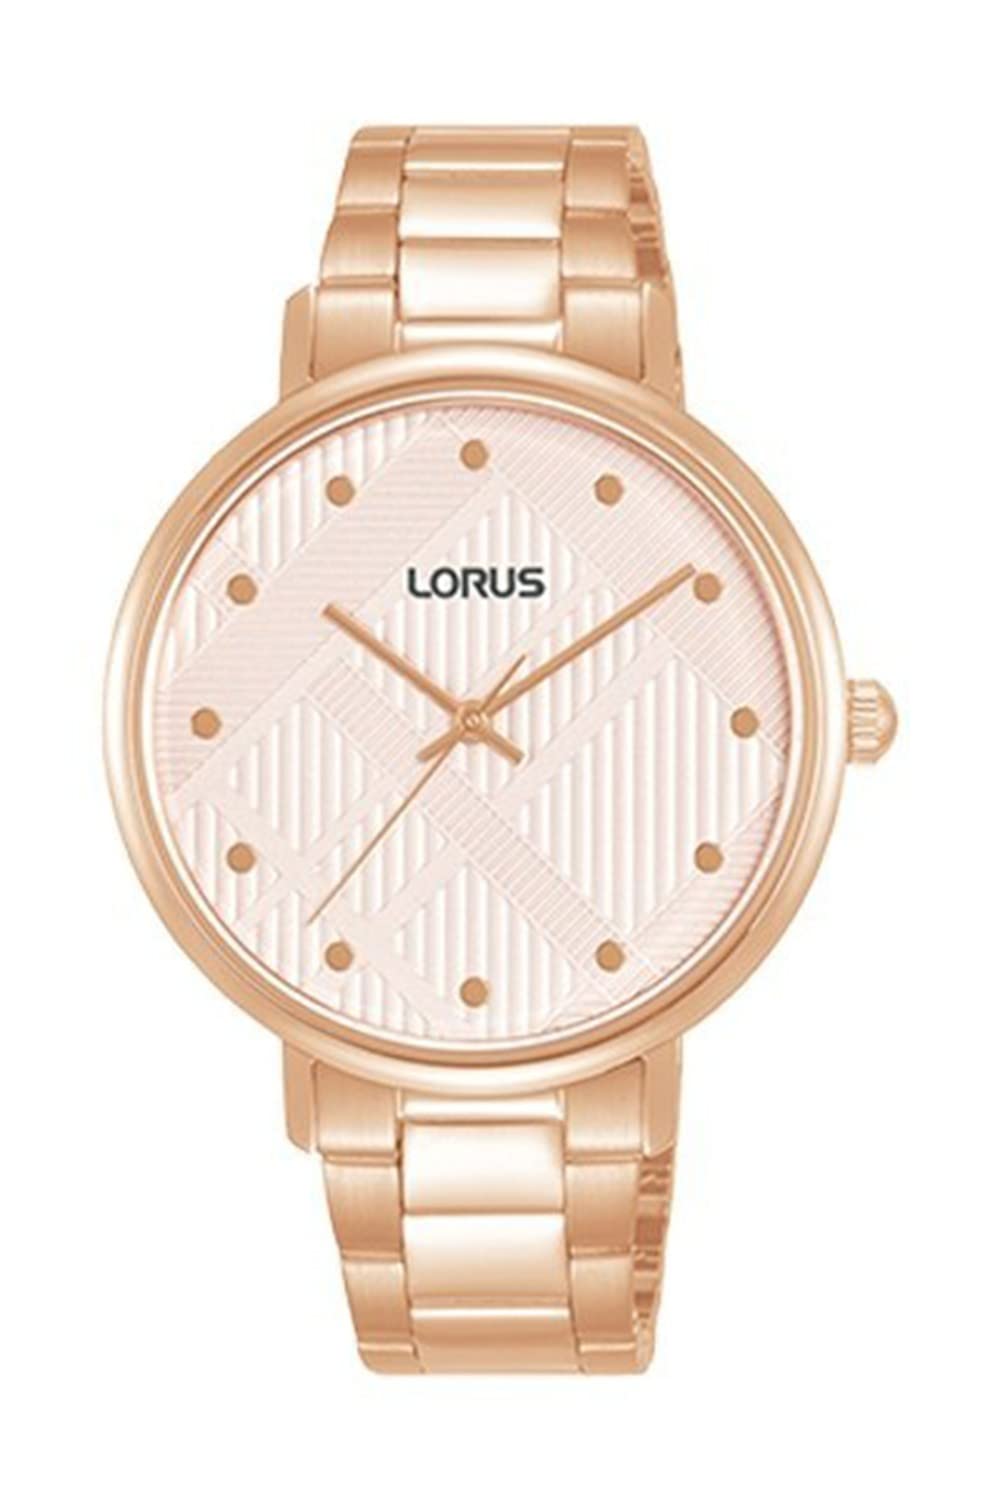 Lorus Woman Womens Analog Quartz Watch with Stainless Steel Bracelet RG202VX9